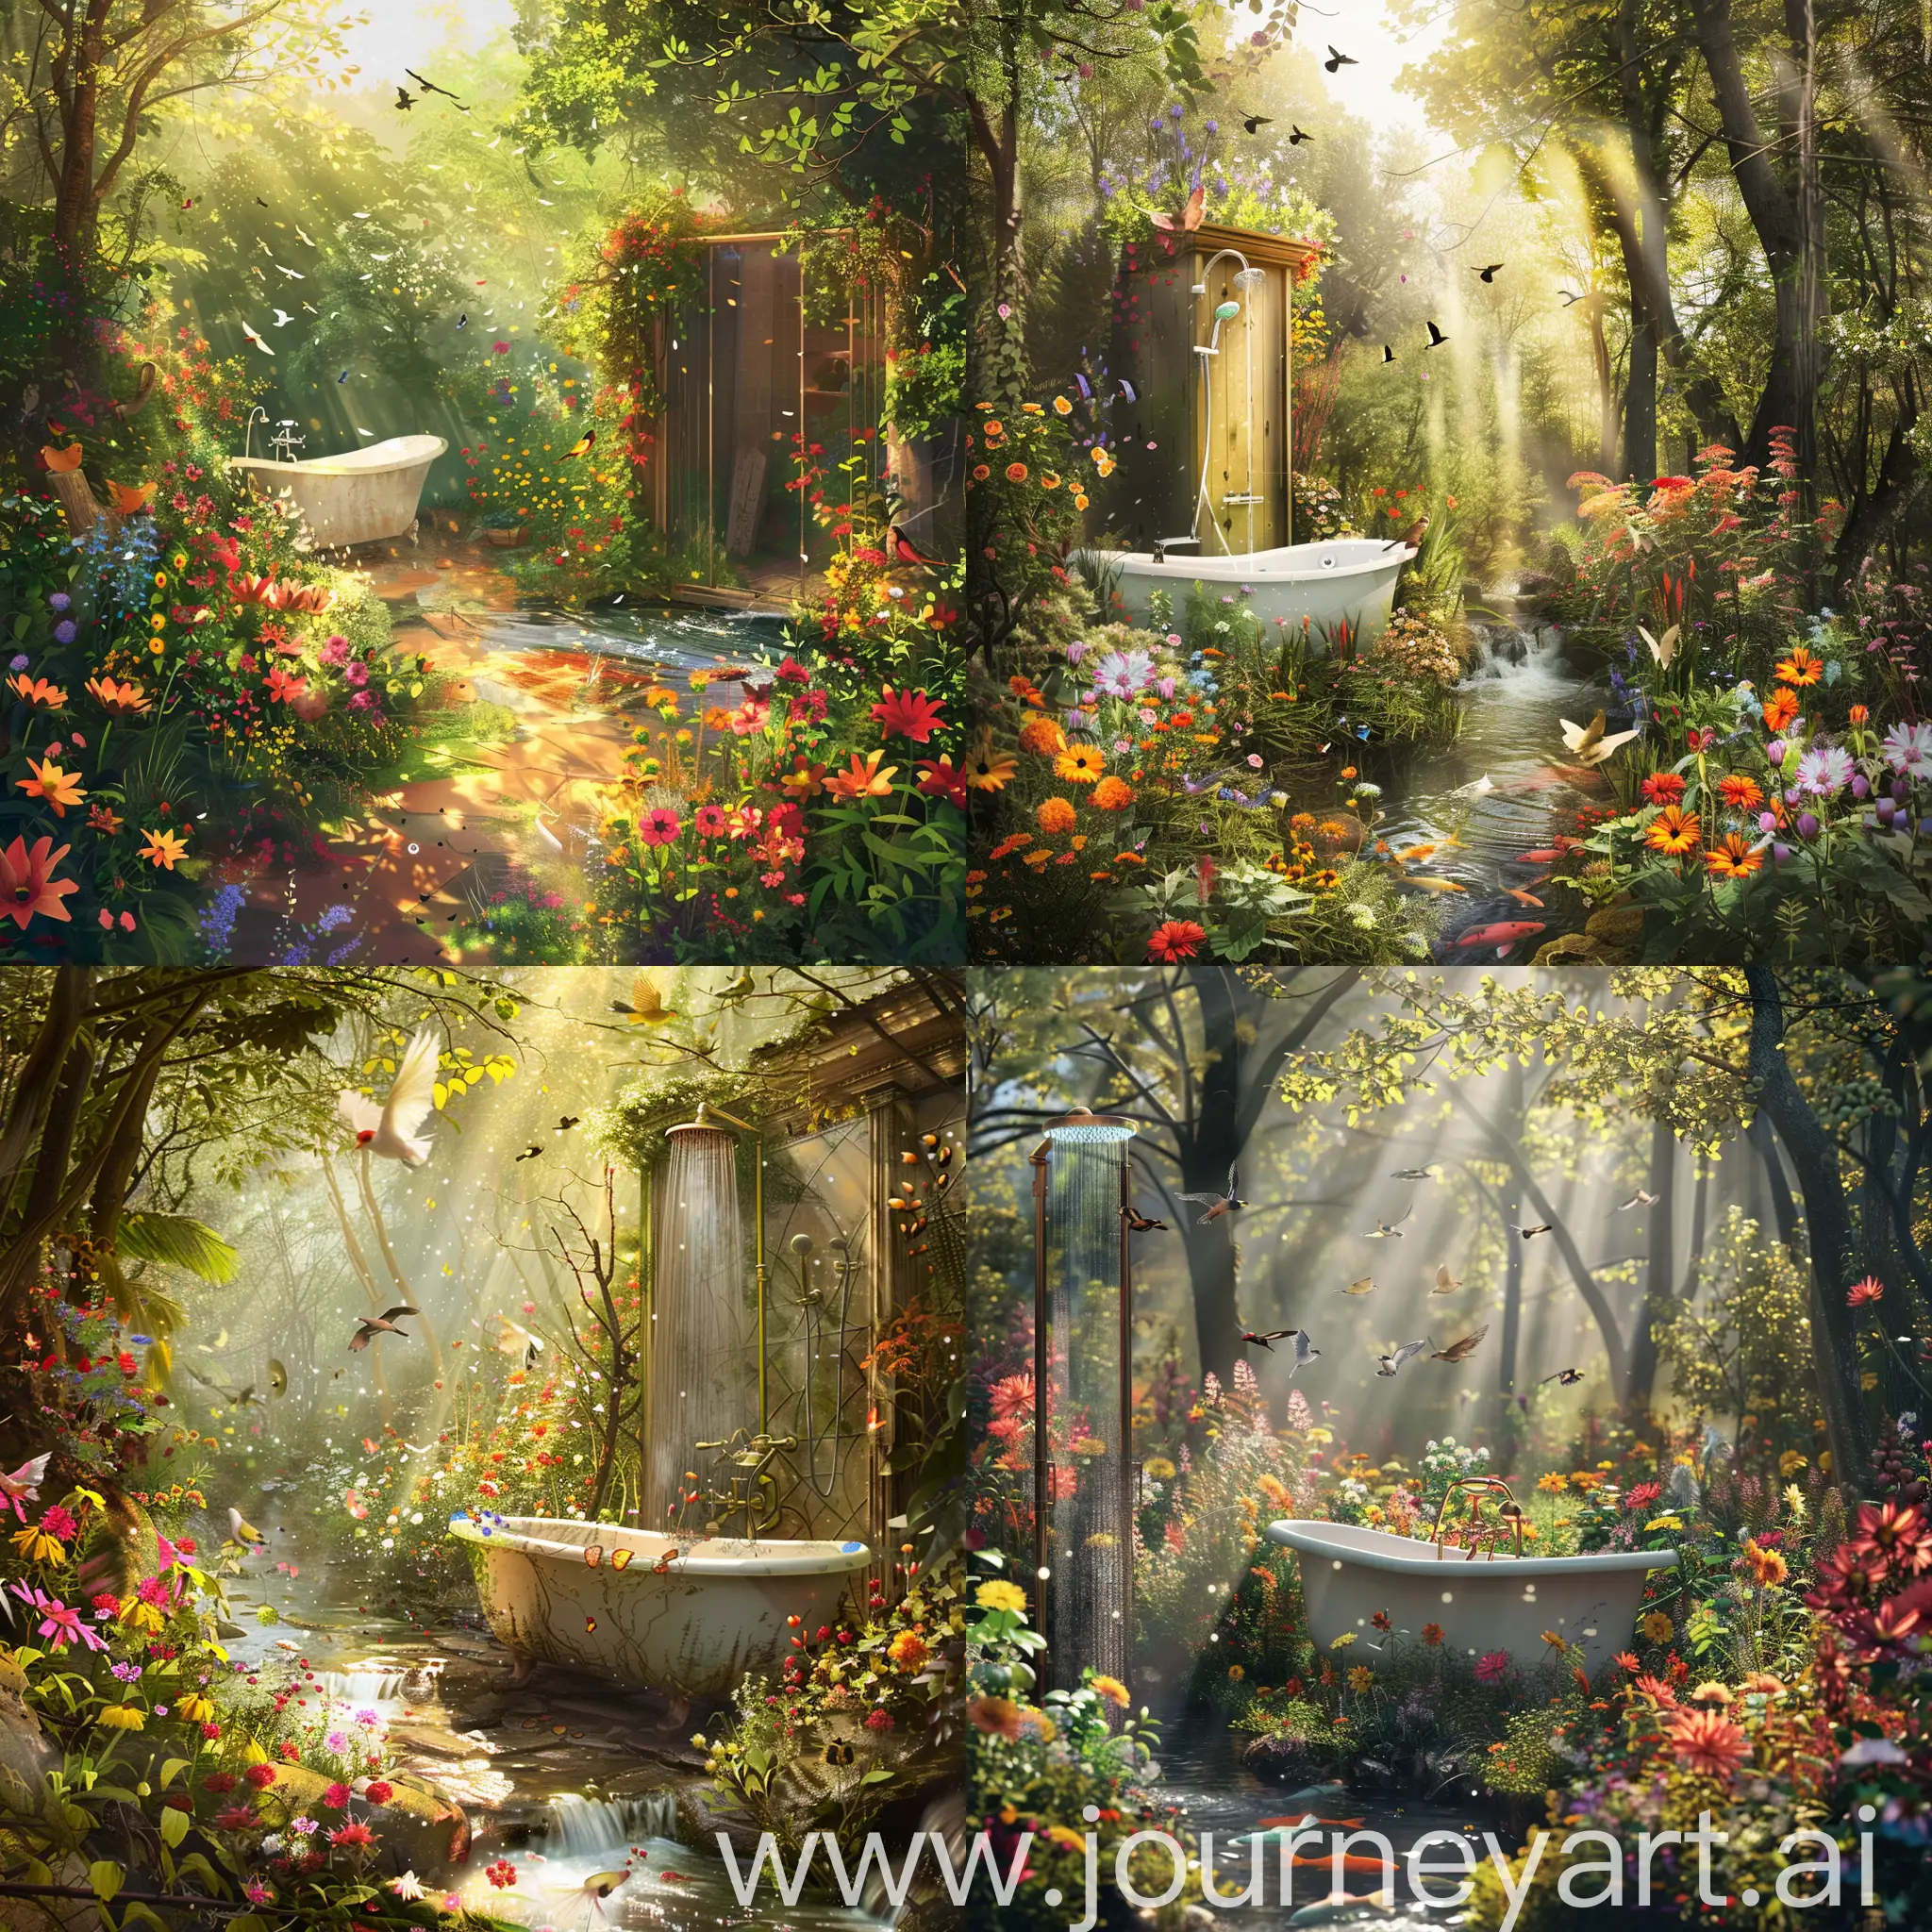 Enchanting-Forest-Oasis-Bathtub-and-Shower-Amidst-Natures-Splendor